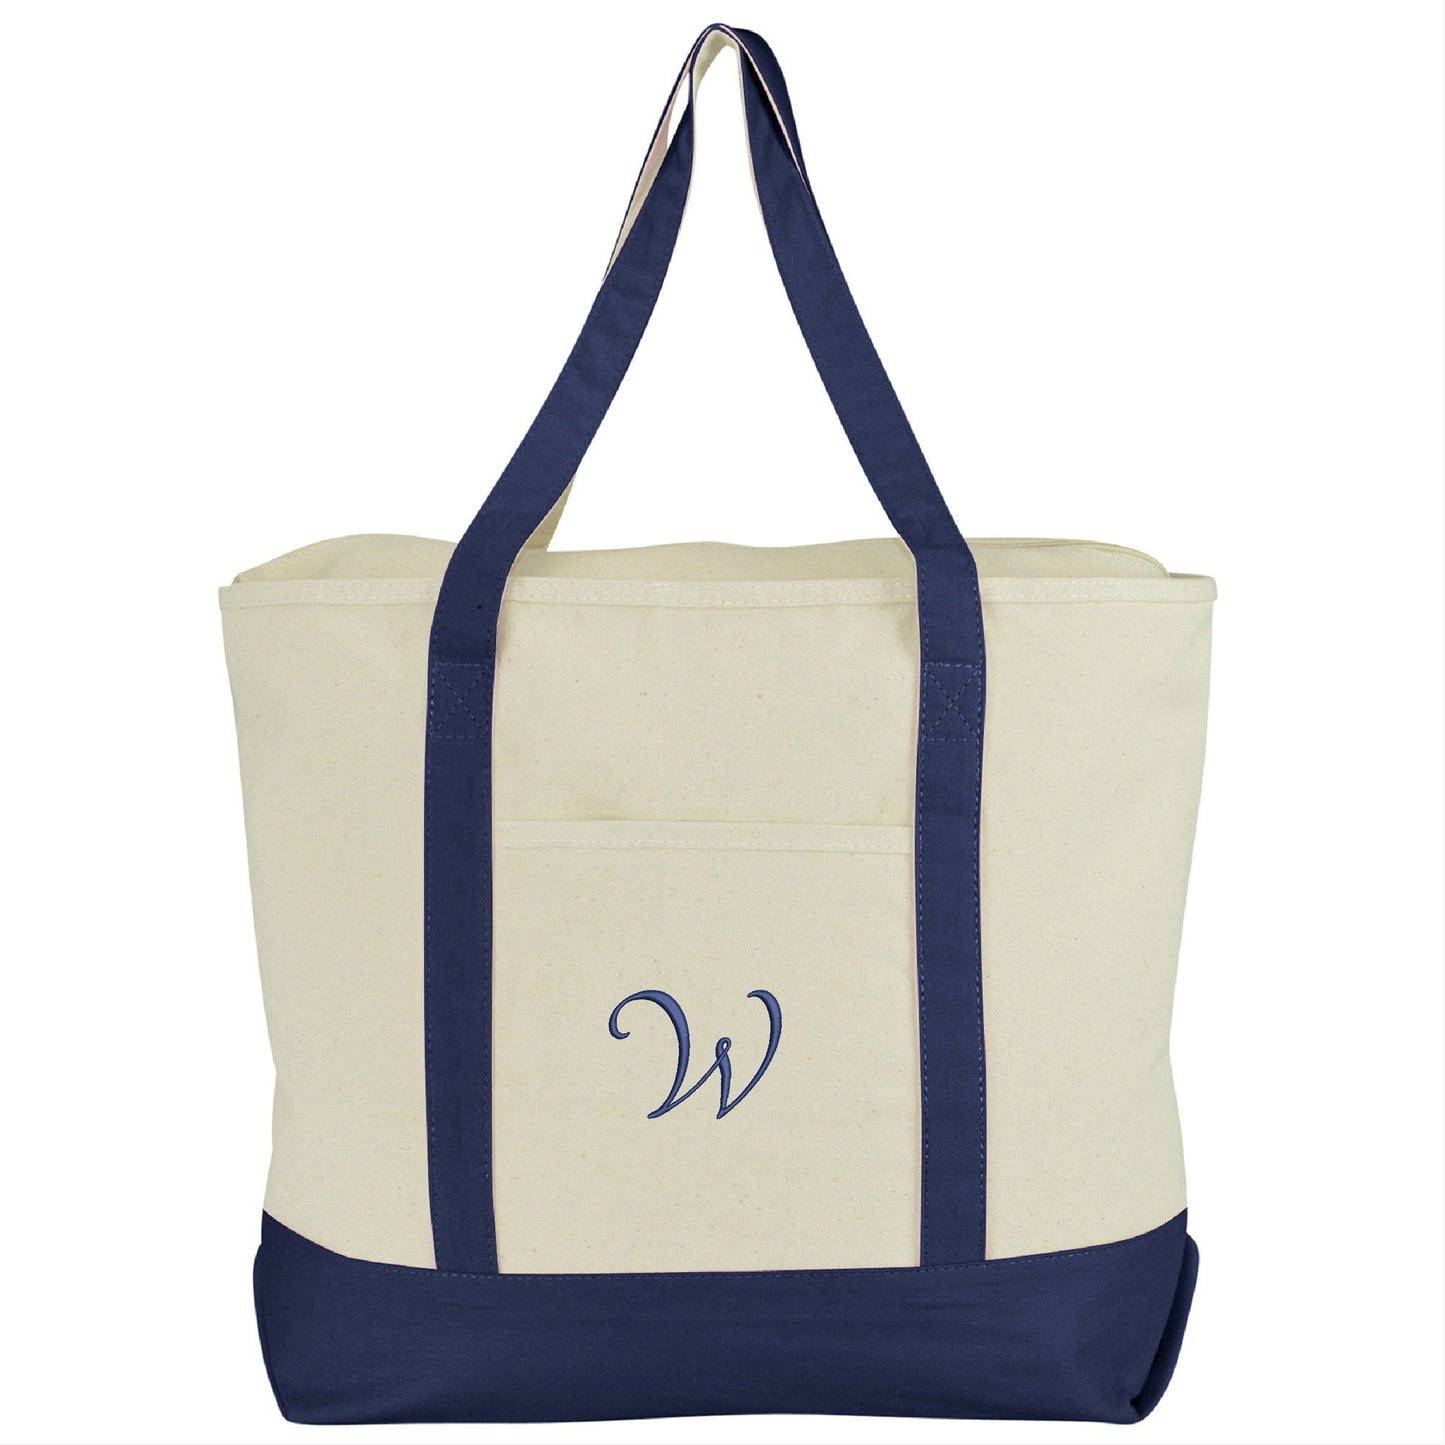 DALIX Personalized Tote Bag Monogram Navy Blue A-Z Bags DALIX W Navy Blue 